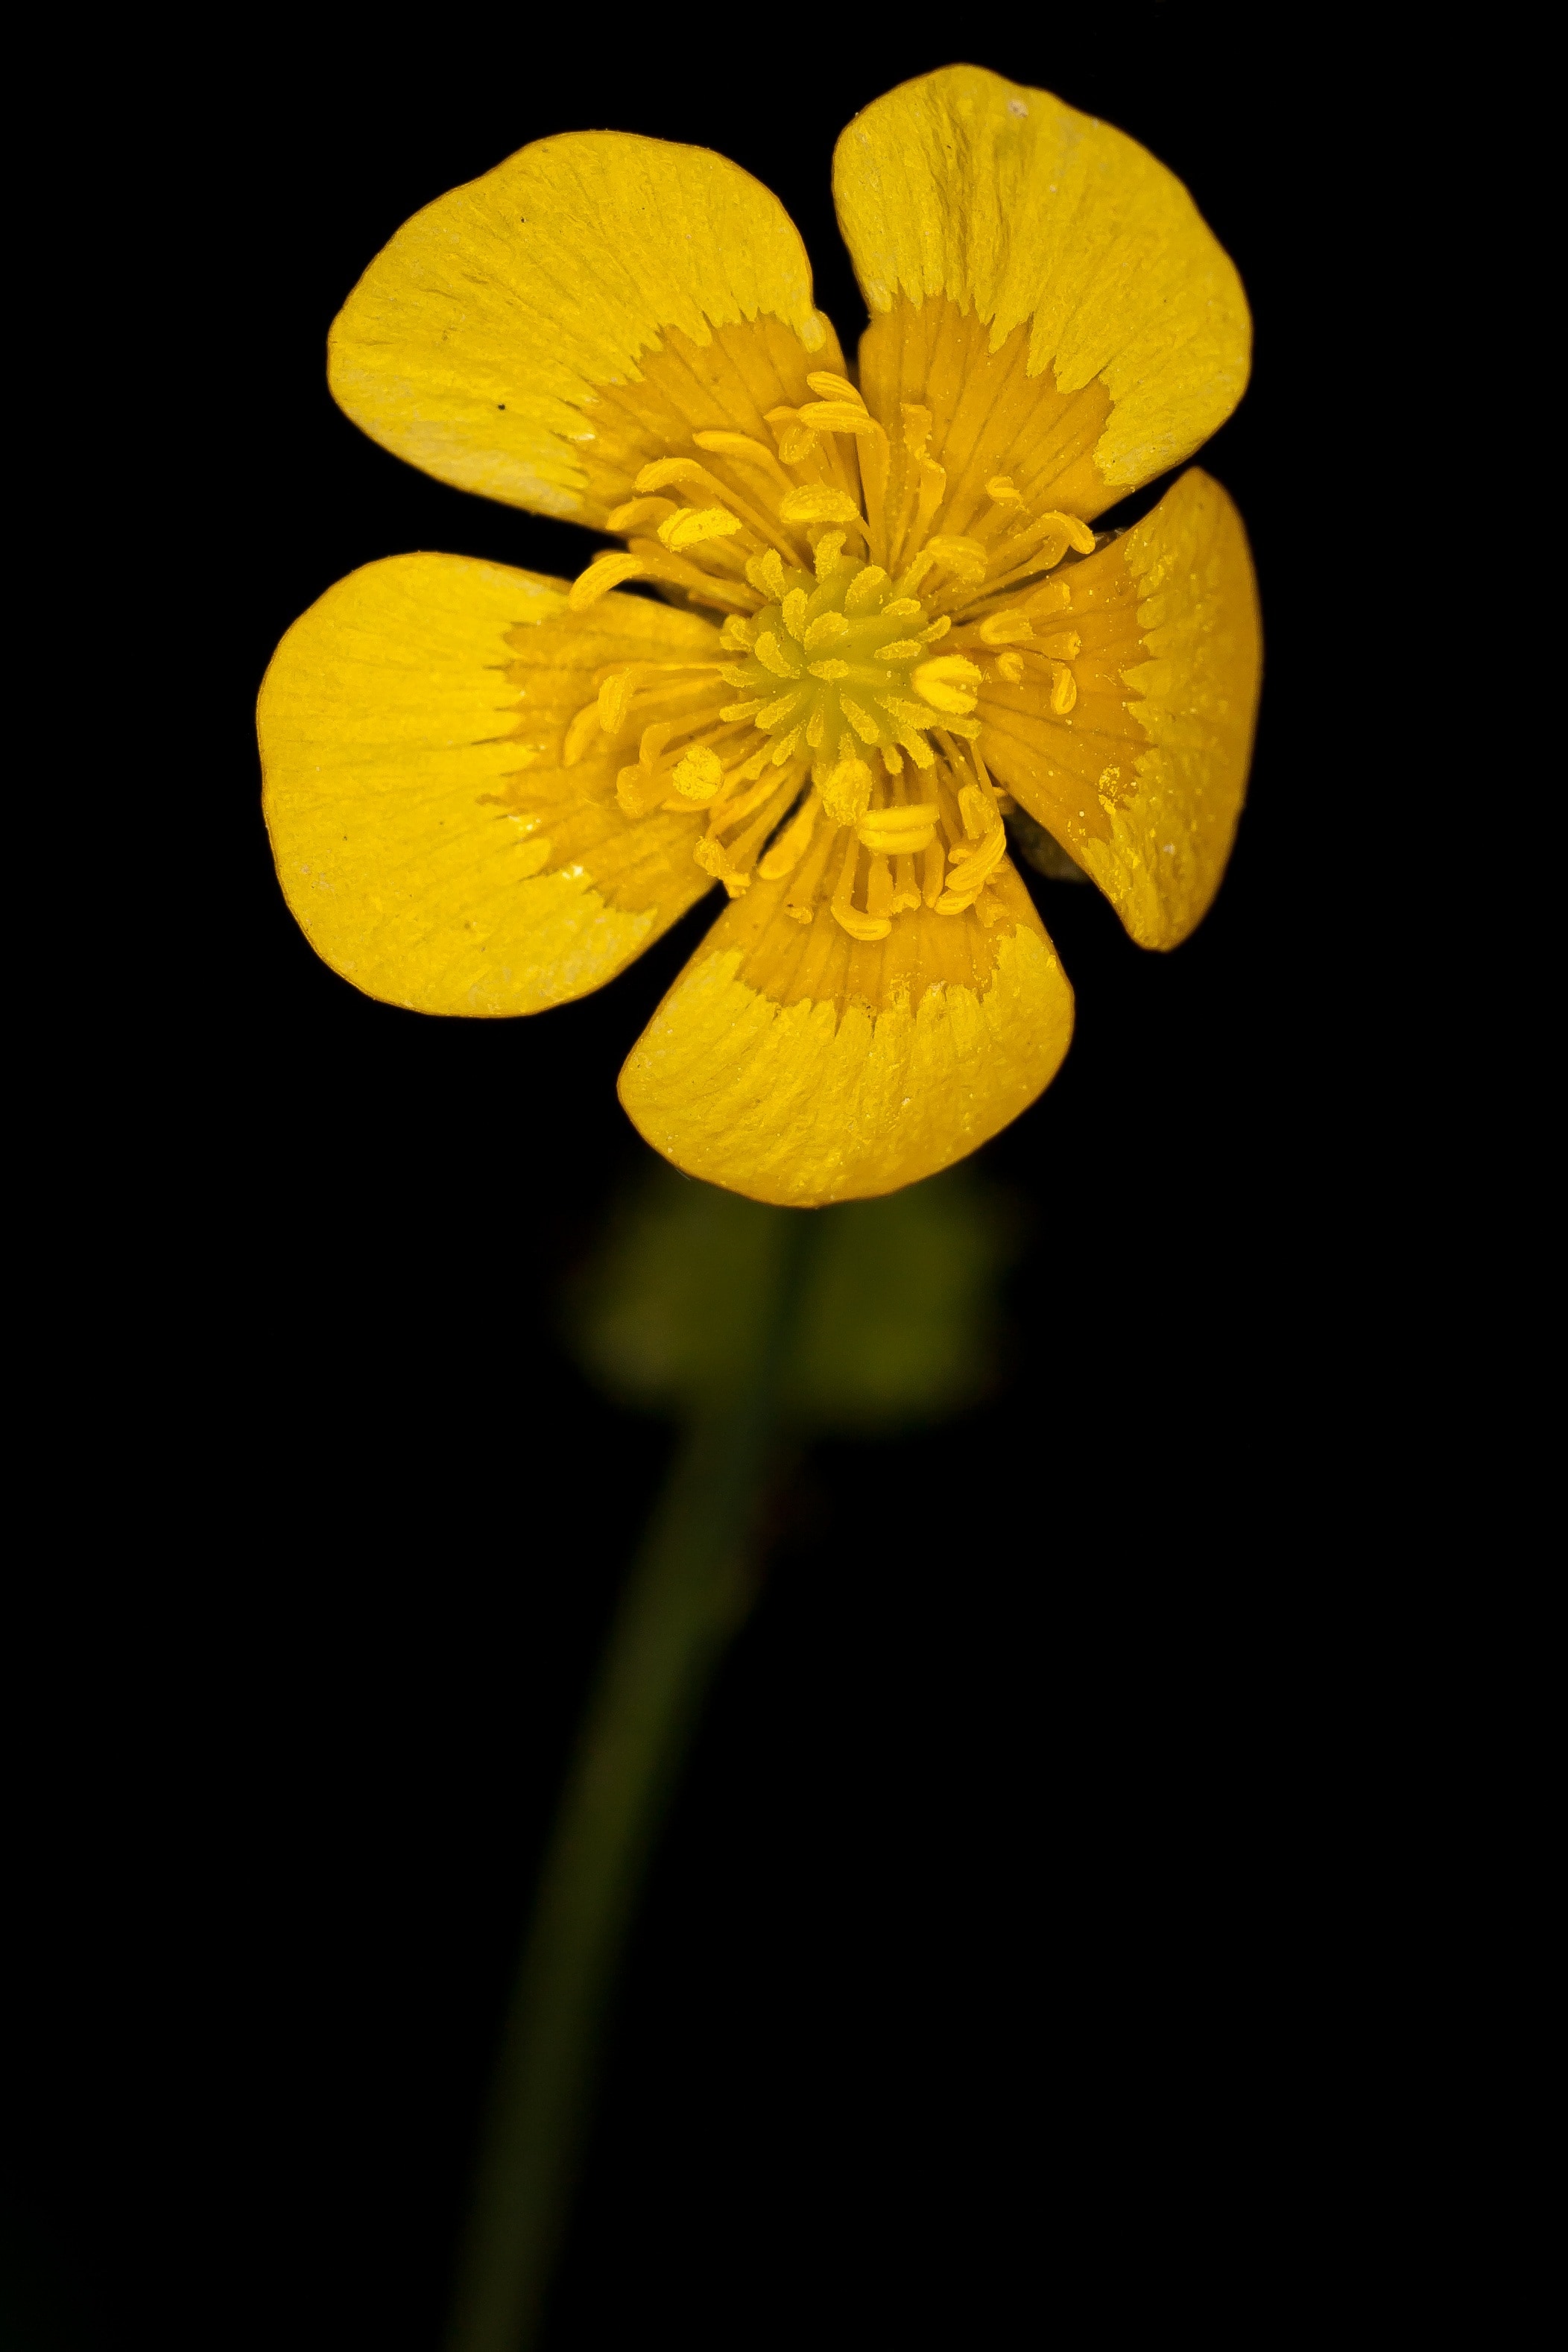 yellow petaled fower